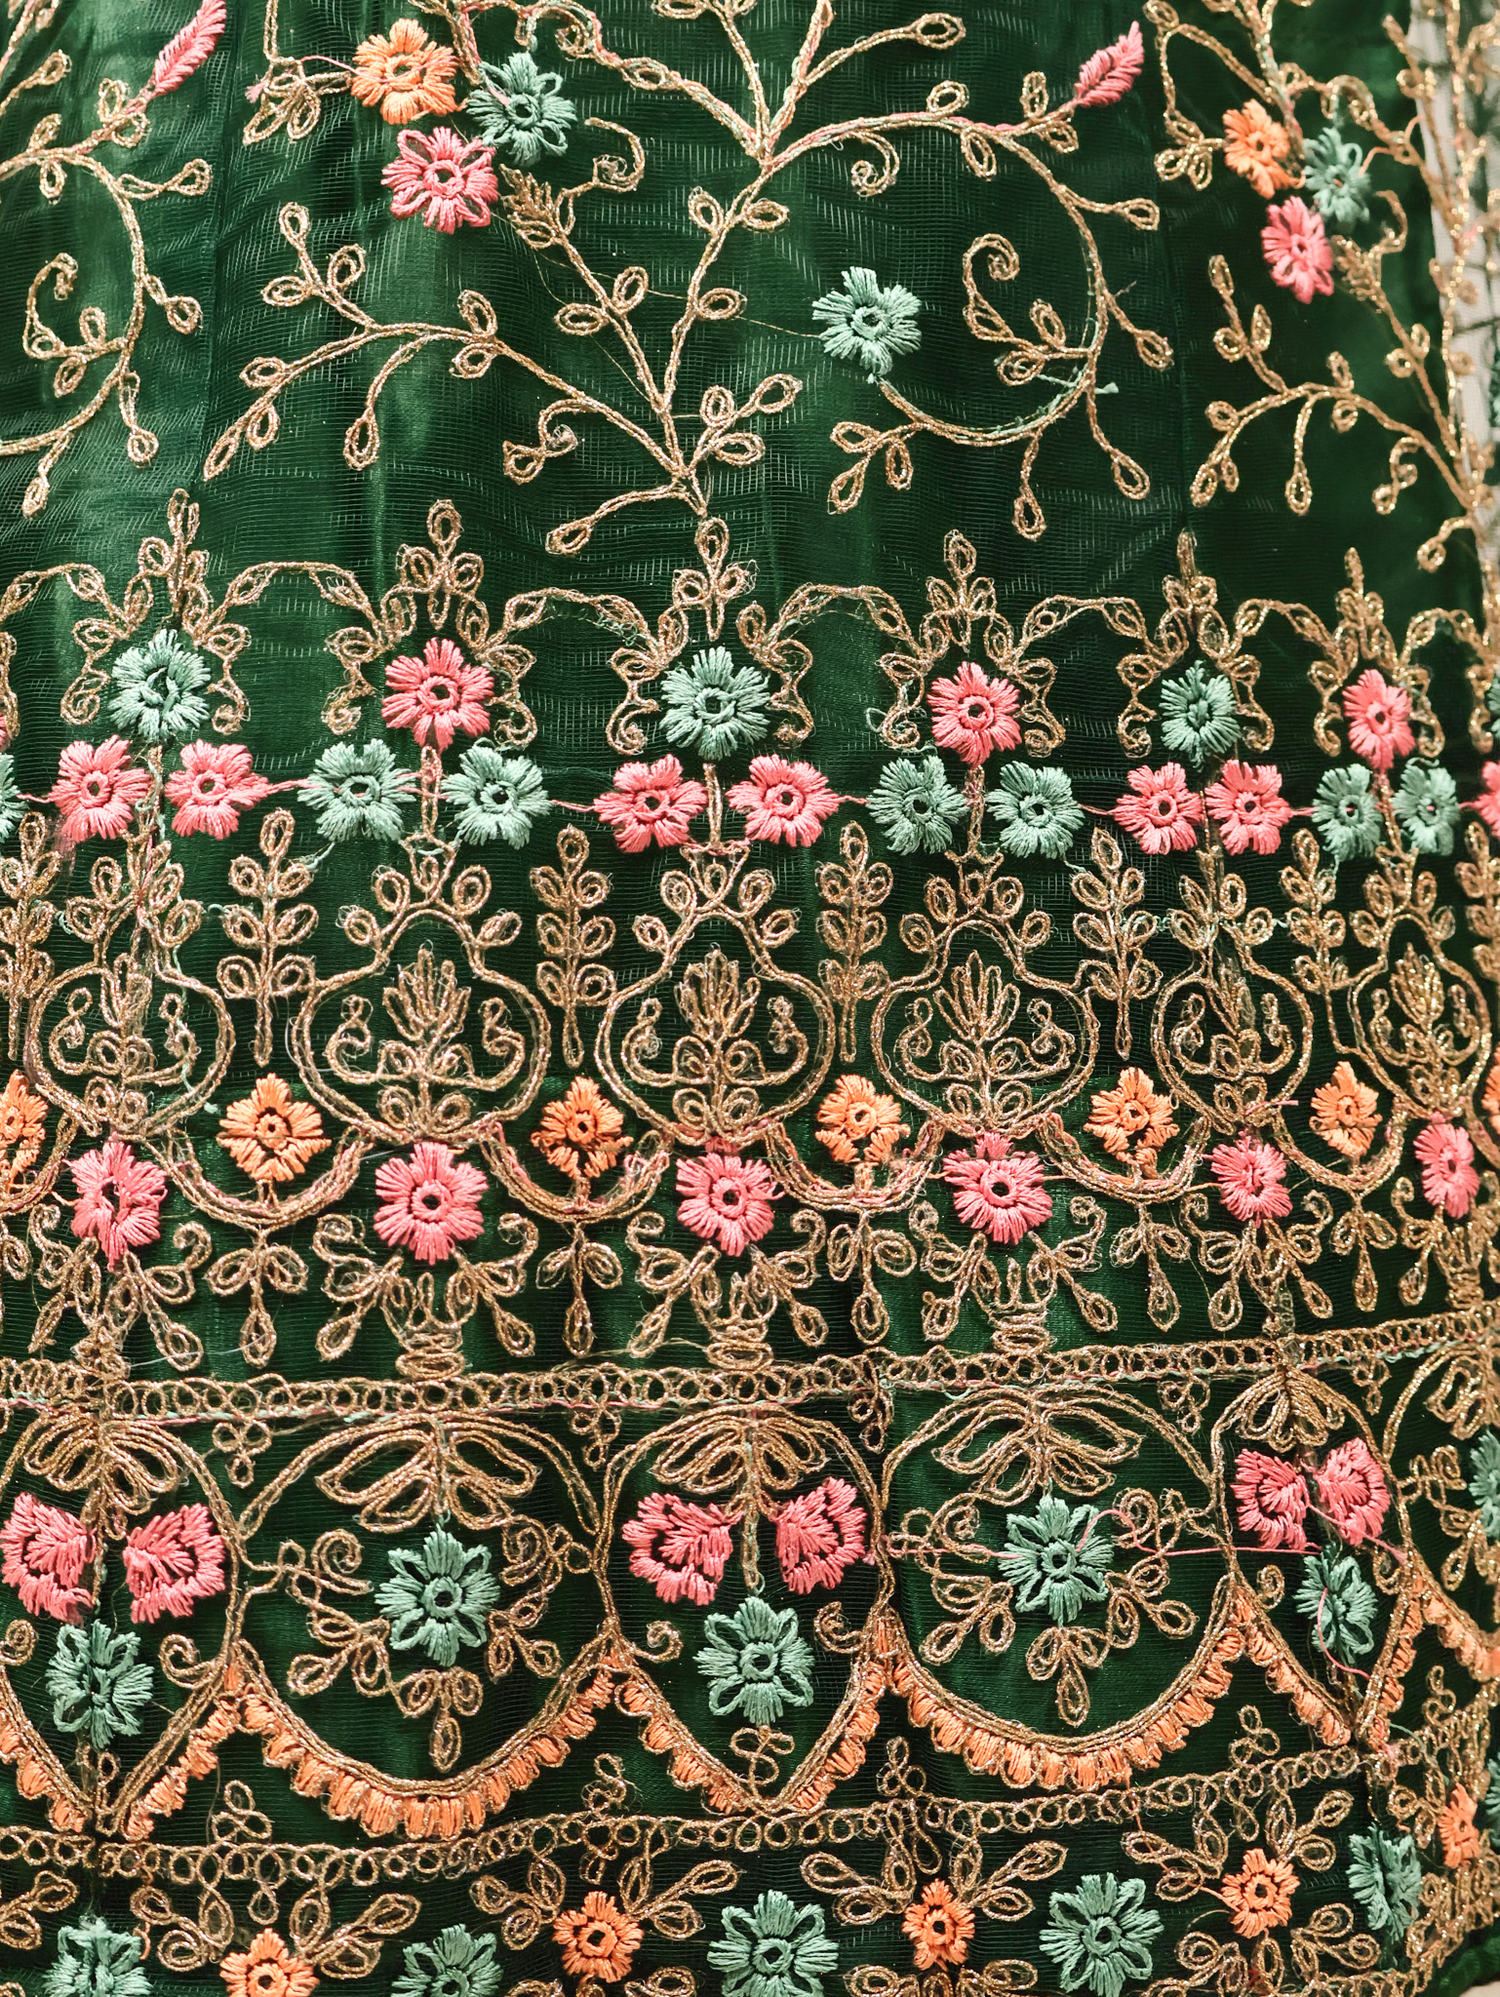 Semi-Stitched Lehenga with Embroidery &amp; Zari Thread Work by Shreekama Dark Green Semi-Stitched Lehenga for Party Festival Wedding Occasion in Noida